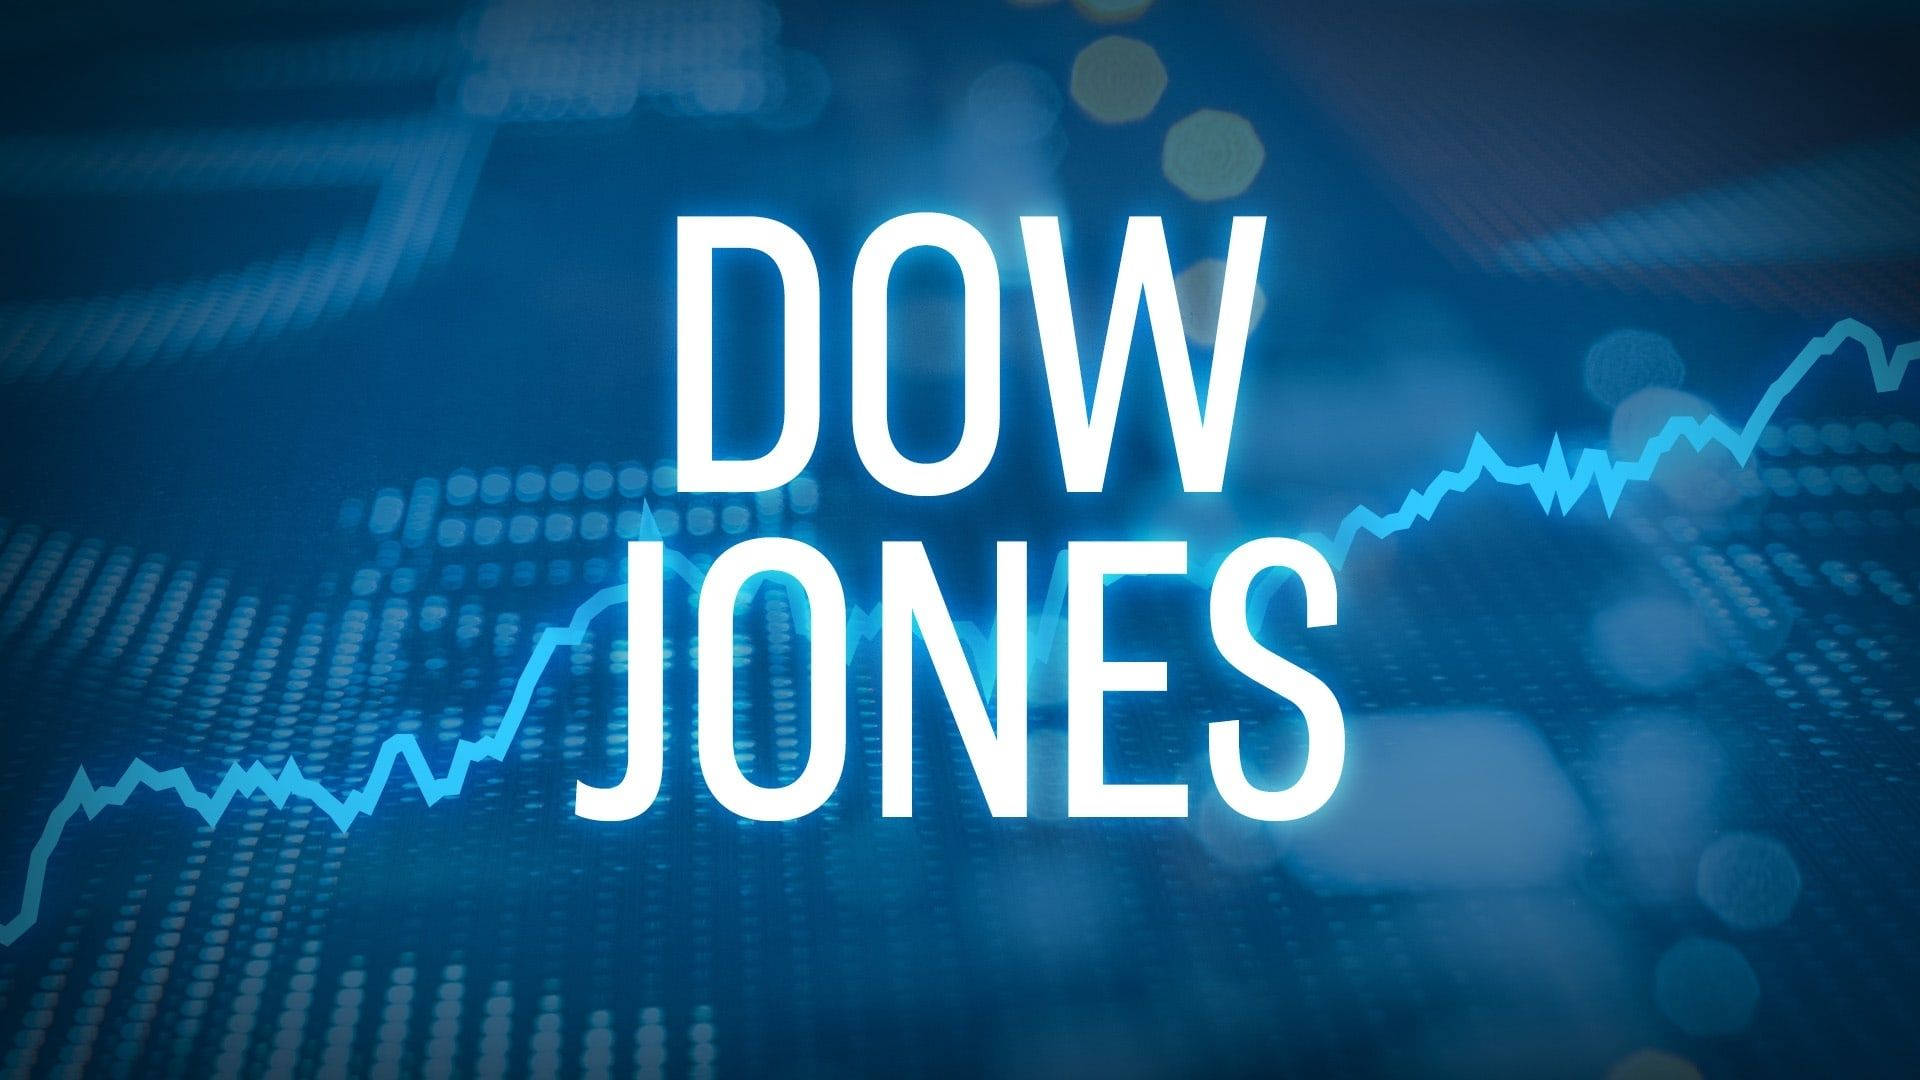 Dow Jones Company Name Background